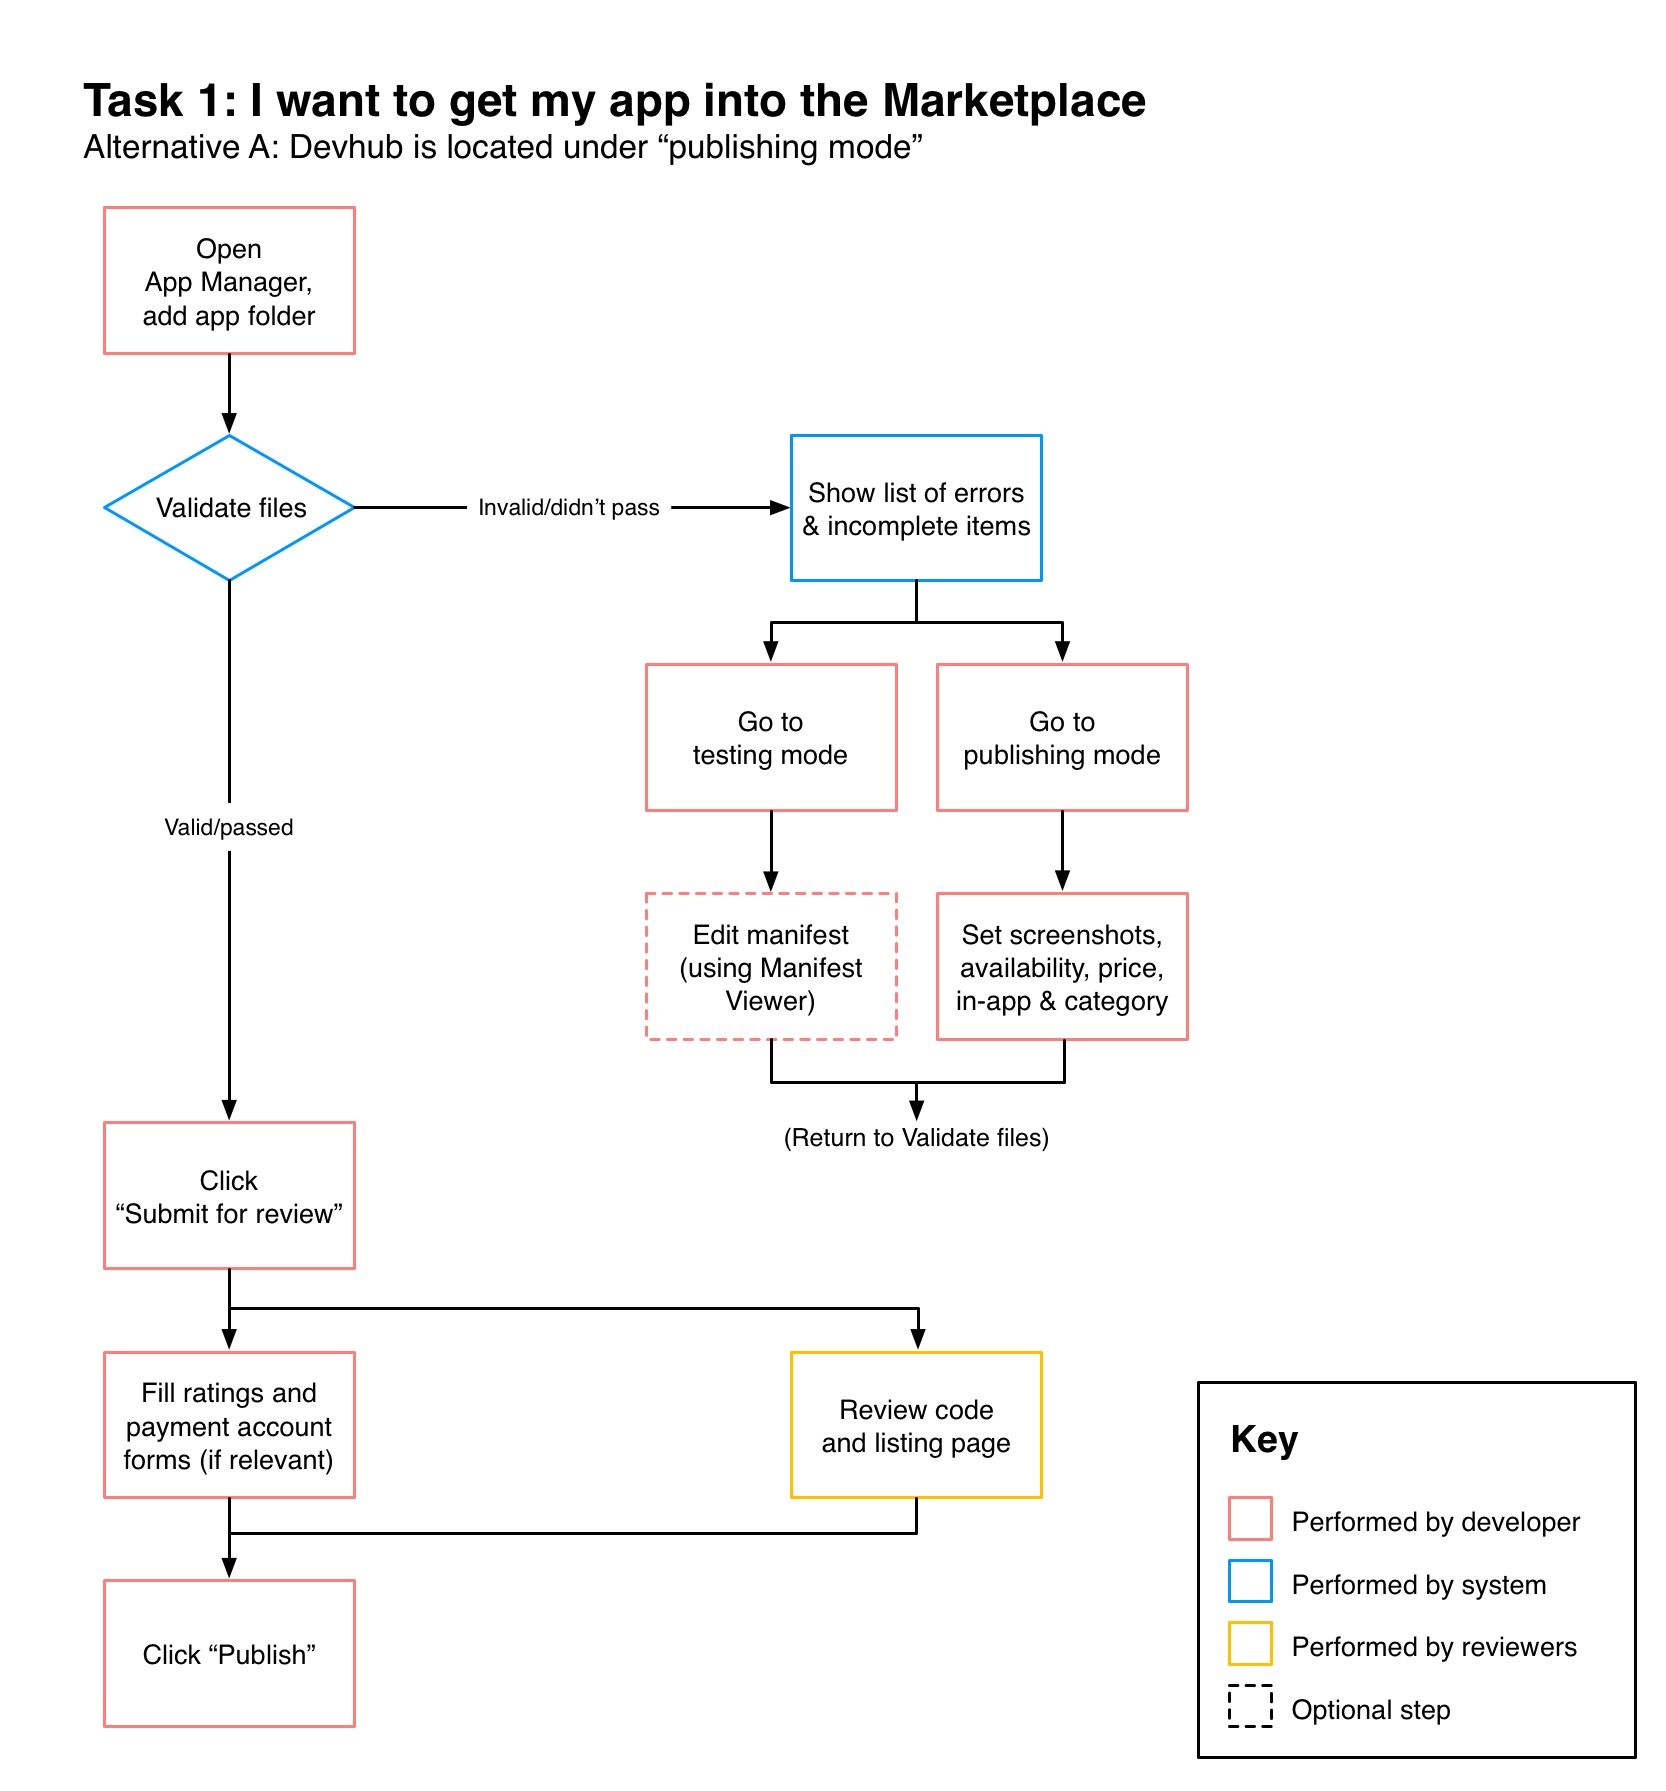 App Manager concept - task 1, alternative A